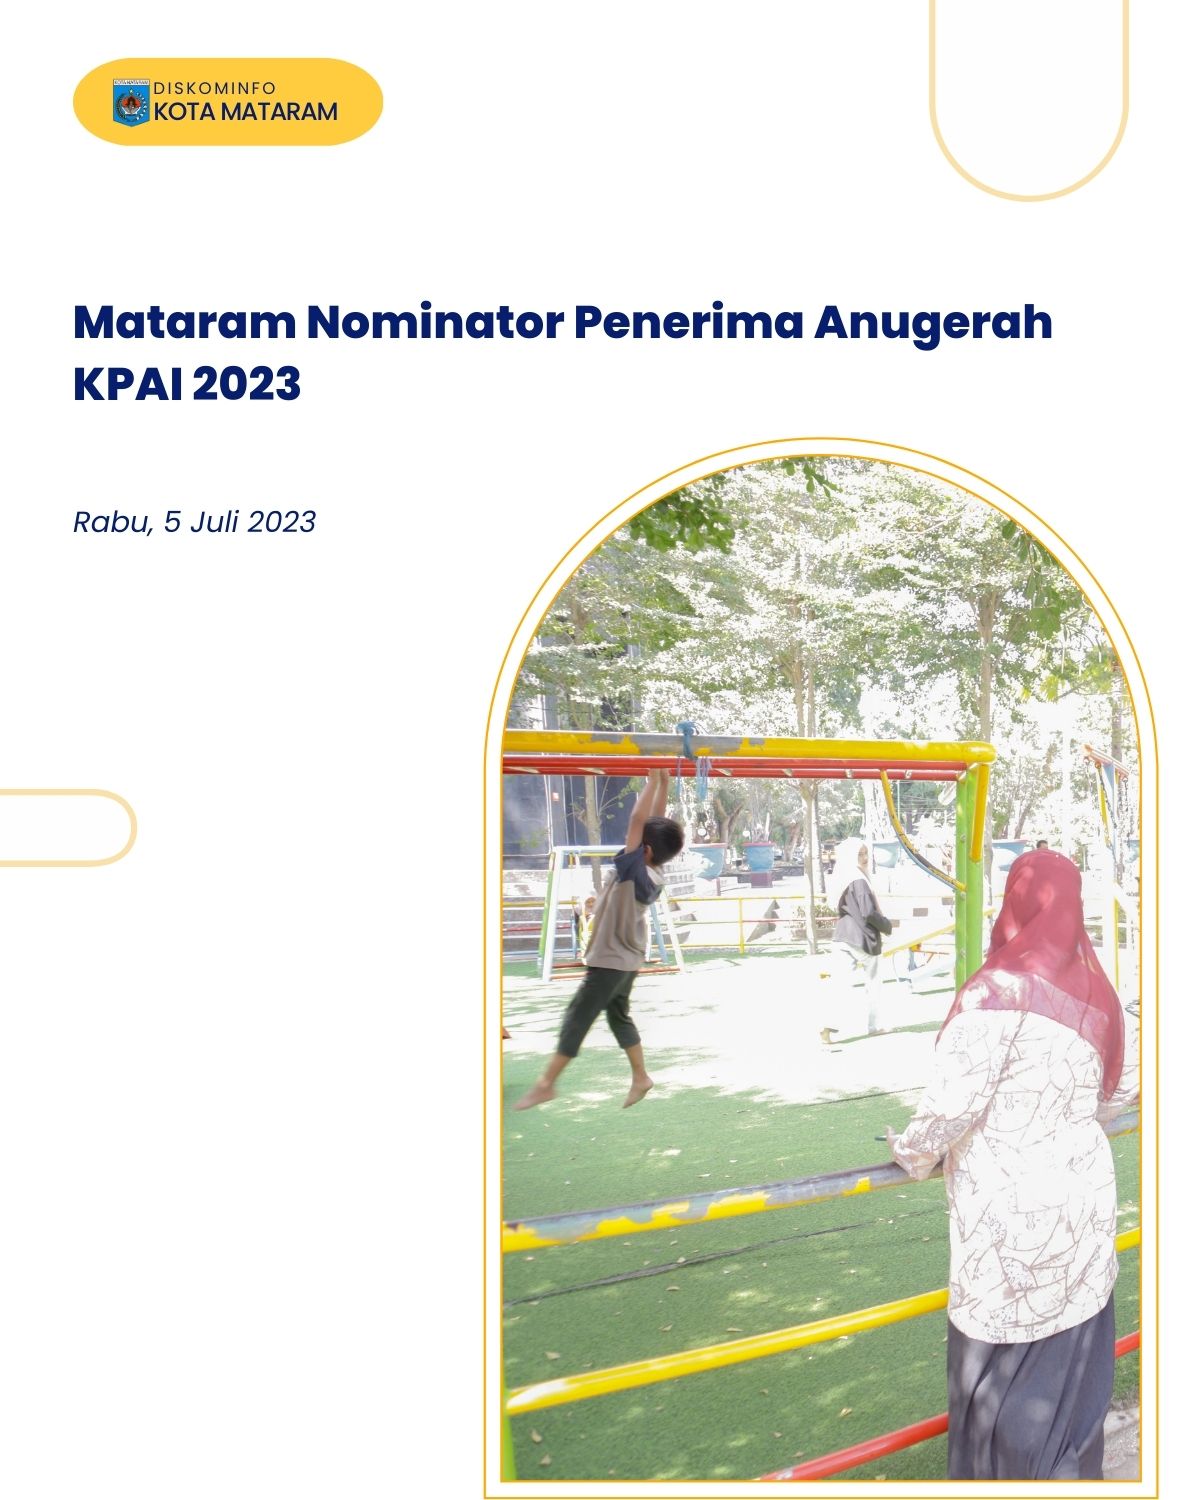 Mataram Nominator Penerima Anugerah Komisi Perlindungan Anak (KPAI) 2023